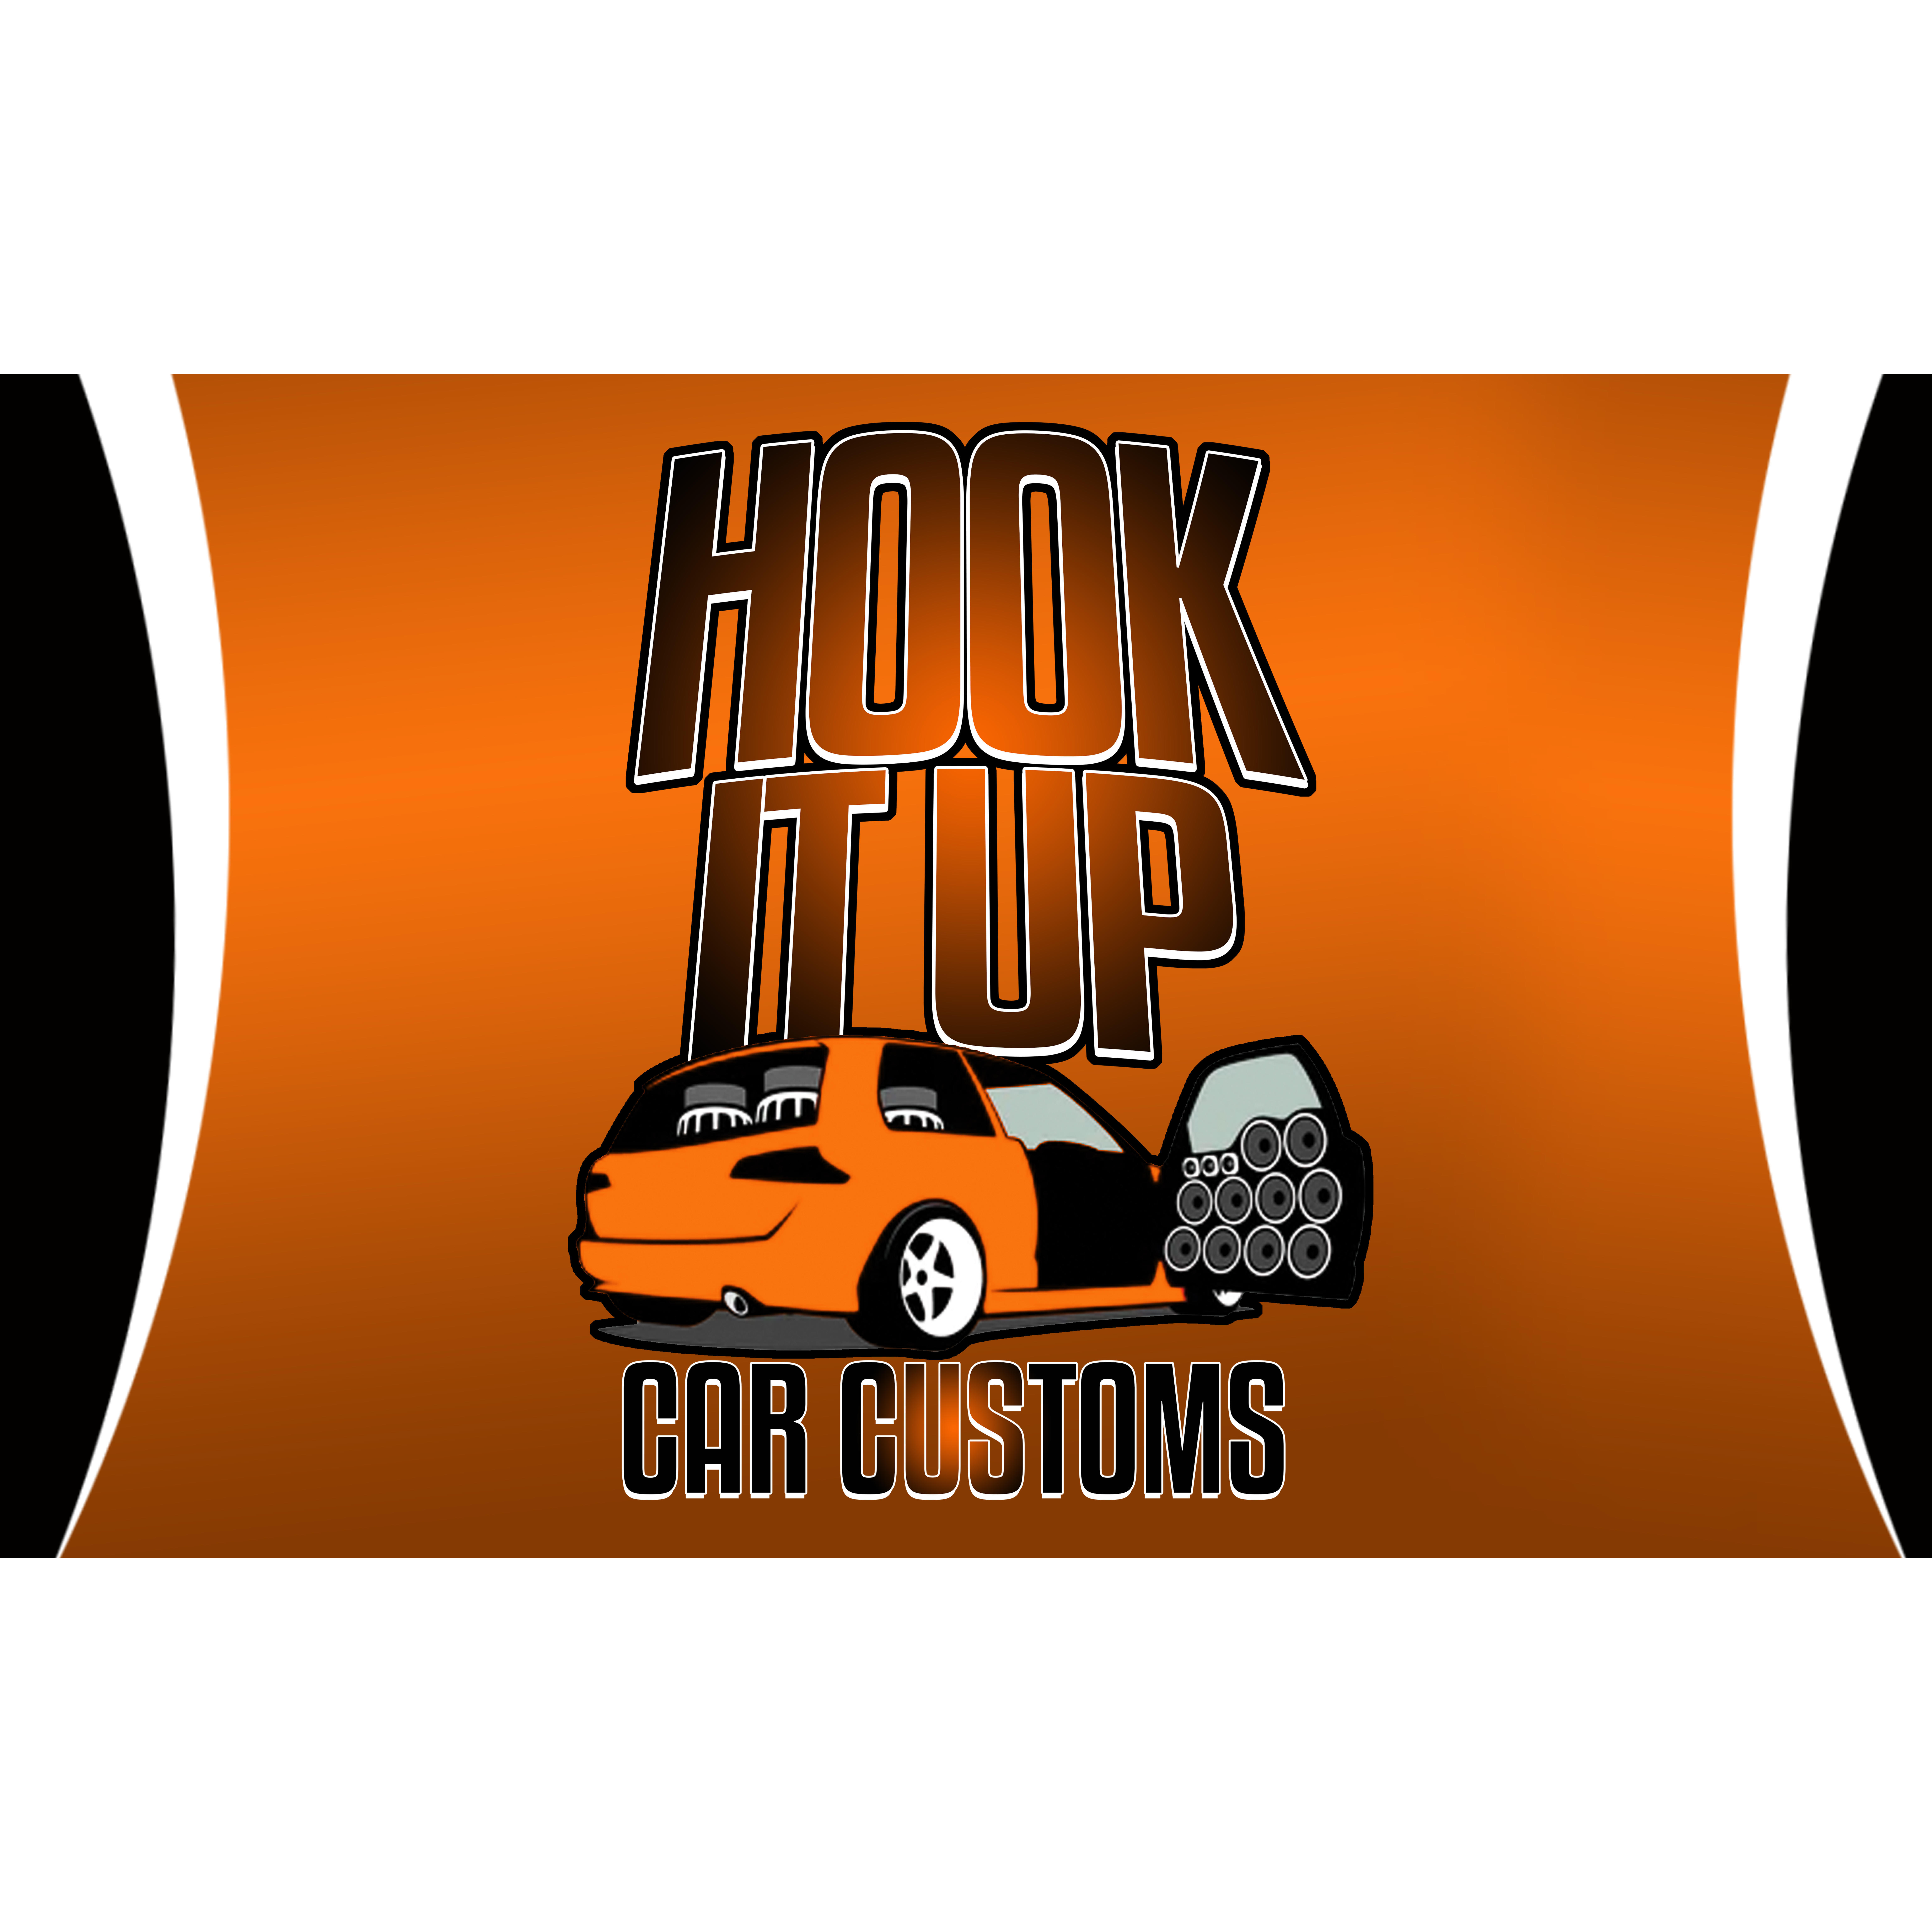 Hook It up car customs